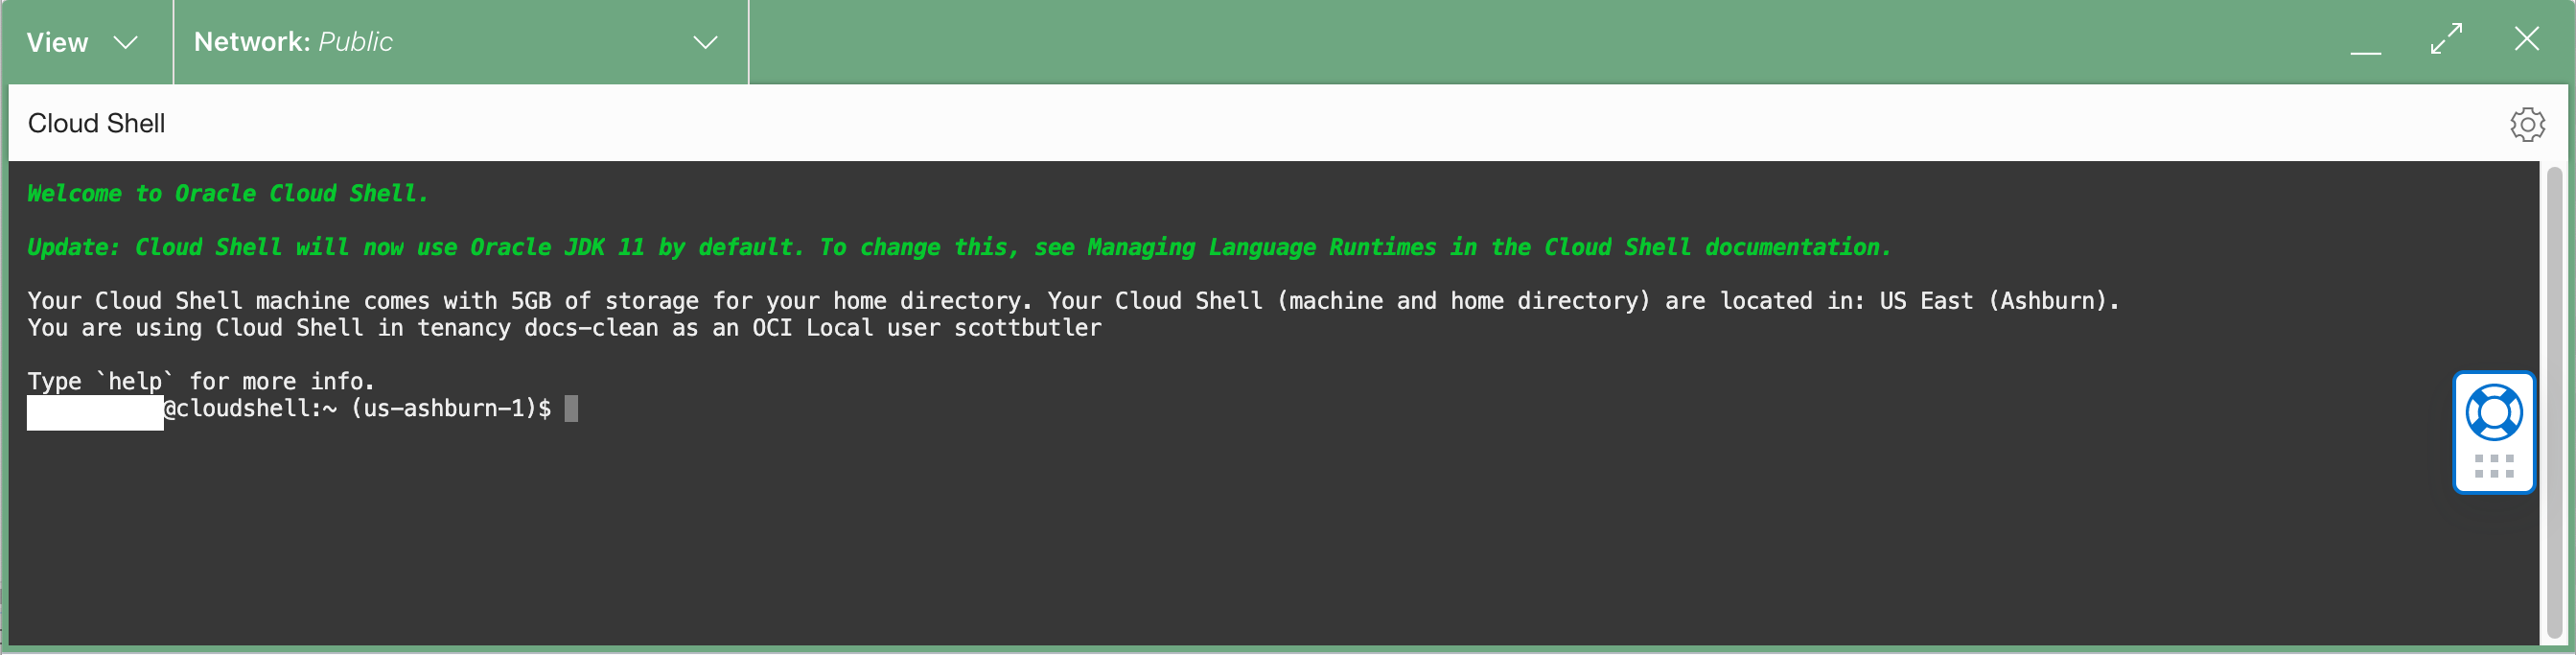 Exemple de volet Cloud Shell